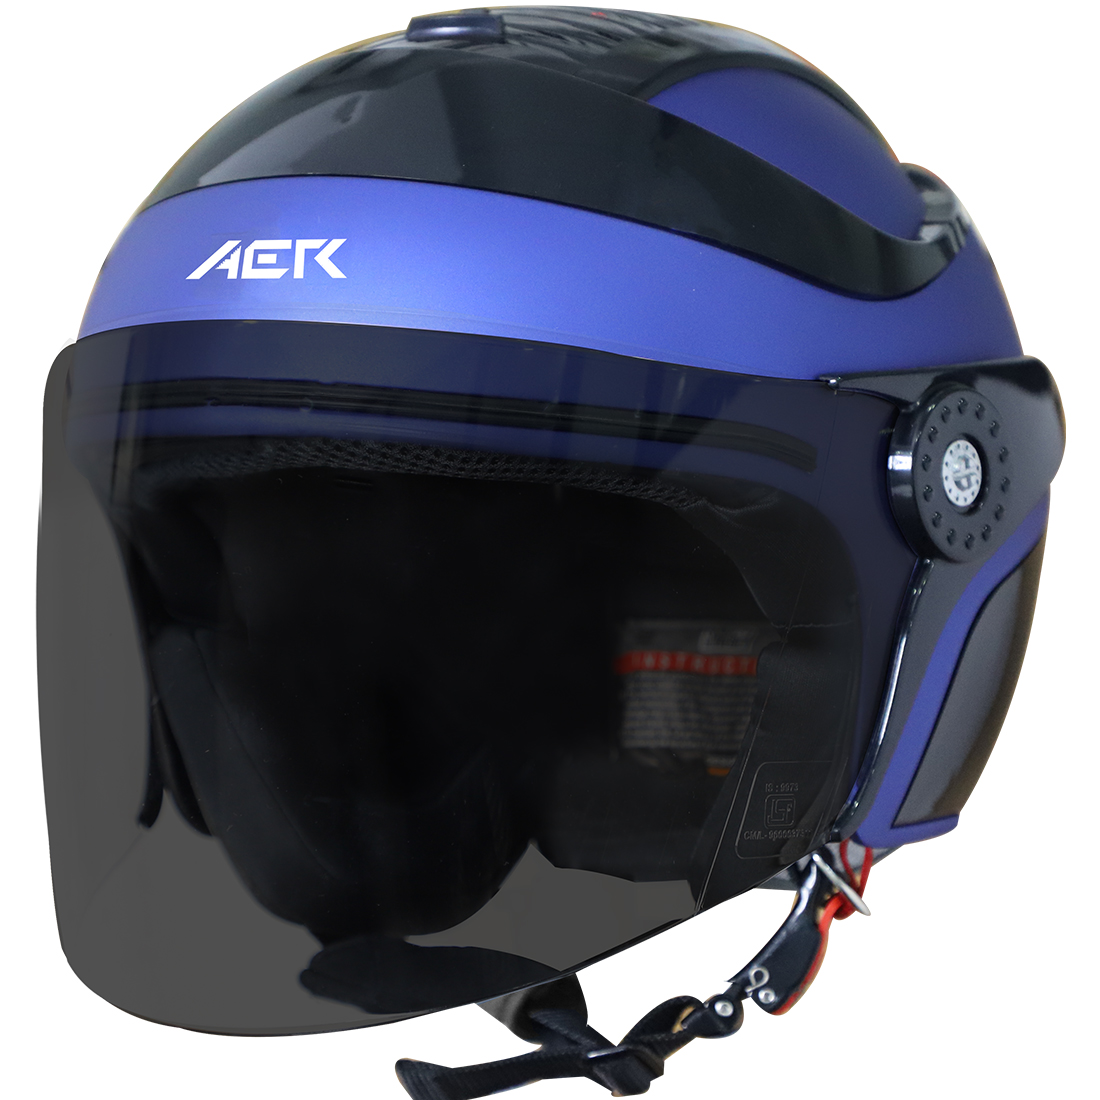 Steelbird SB-29 AER ISI Certified Open Face Helmet For Men And Women (Matt Y.Blue Black With Smoke Visor)